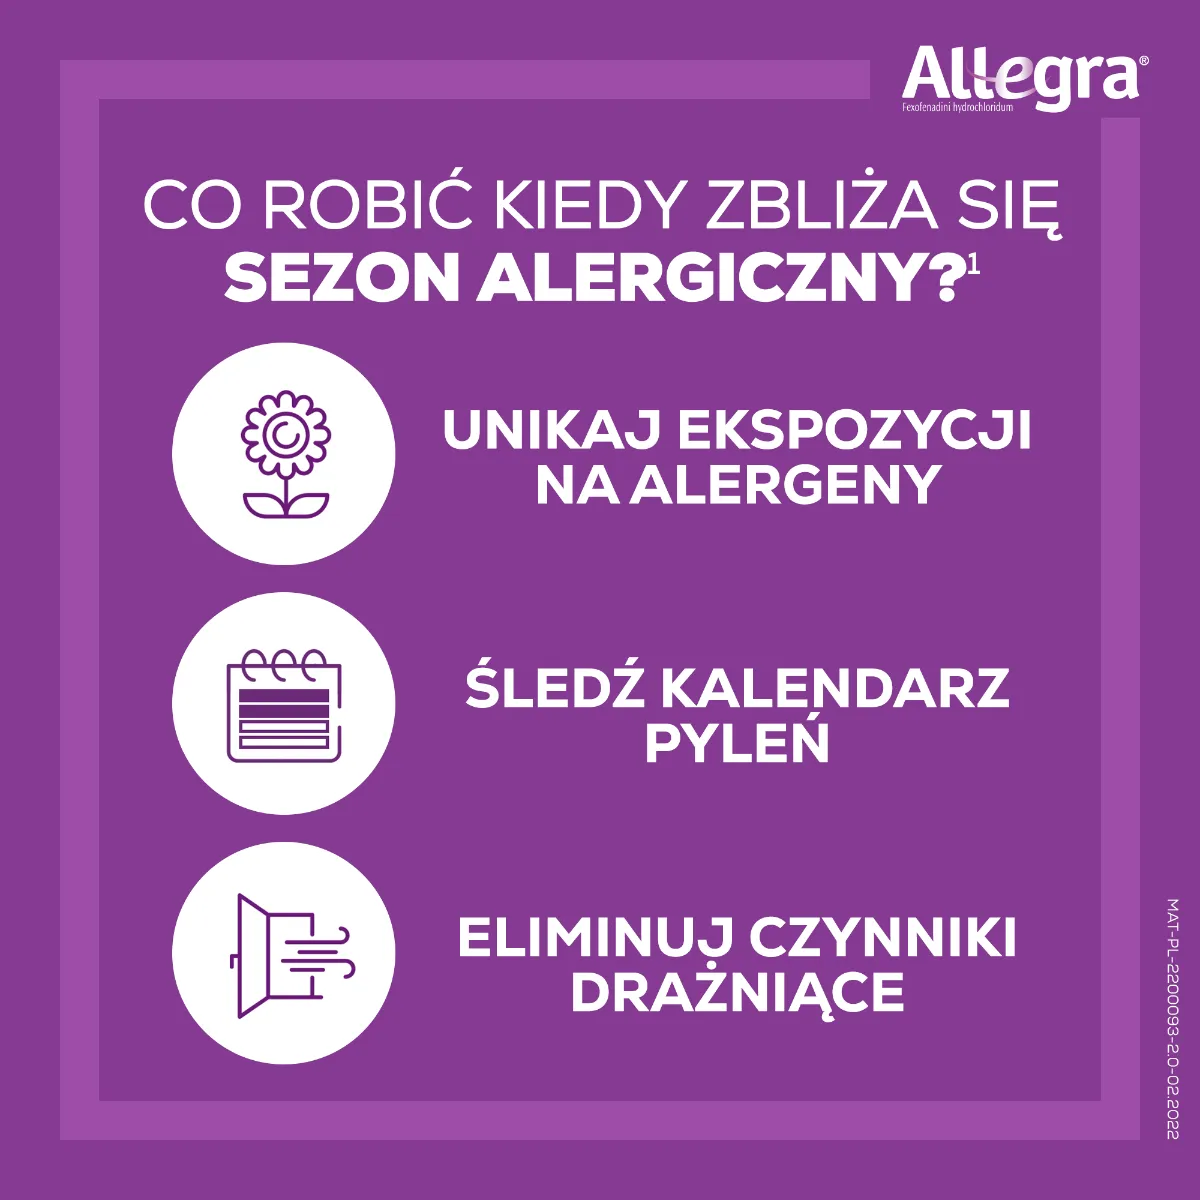 Allegra, 120 mg, 10 tabletek powlekanych 